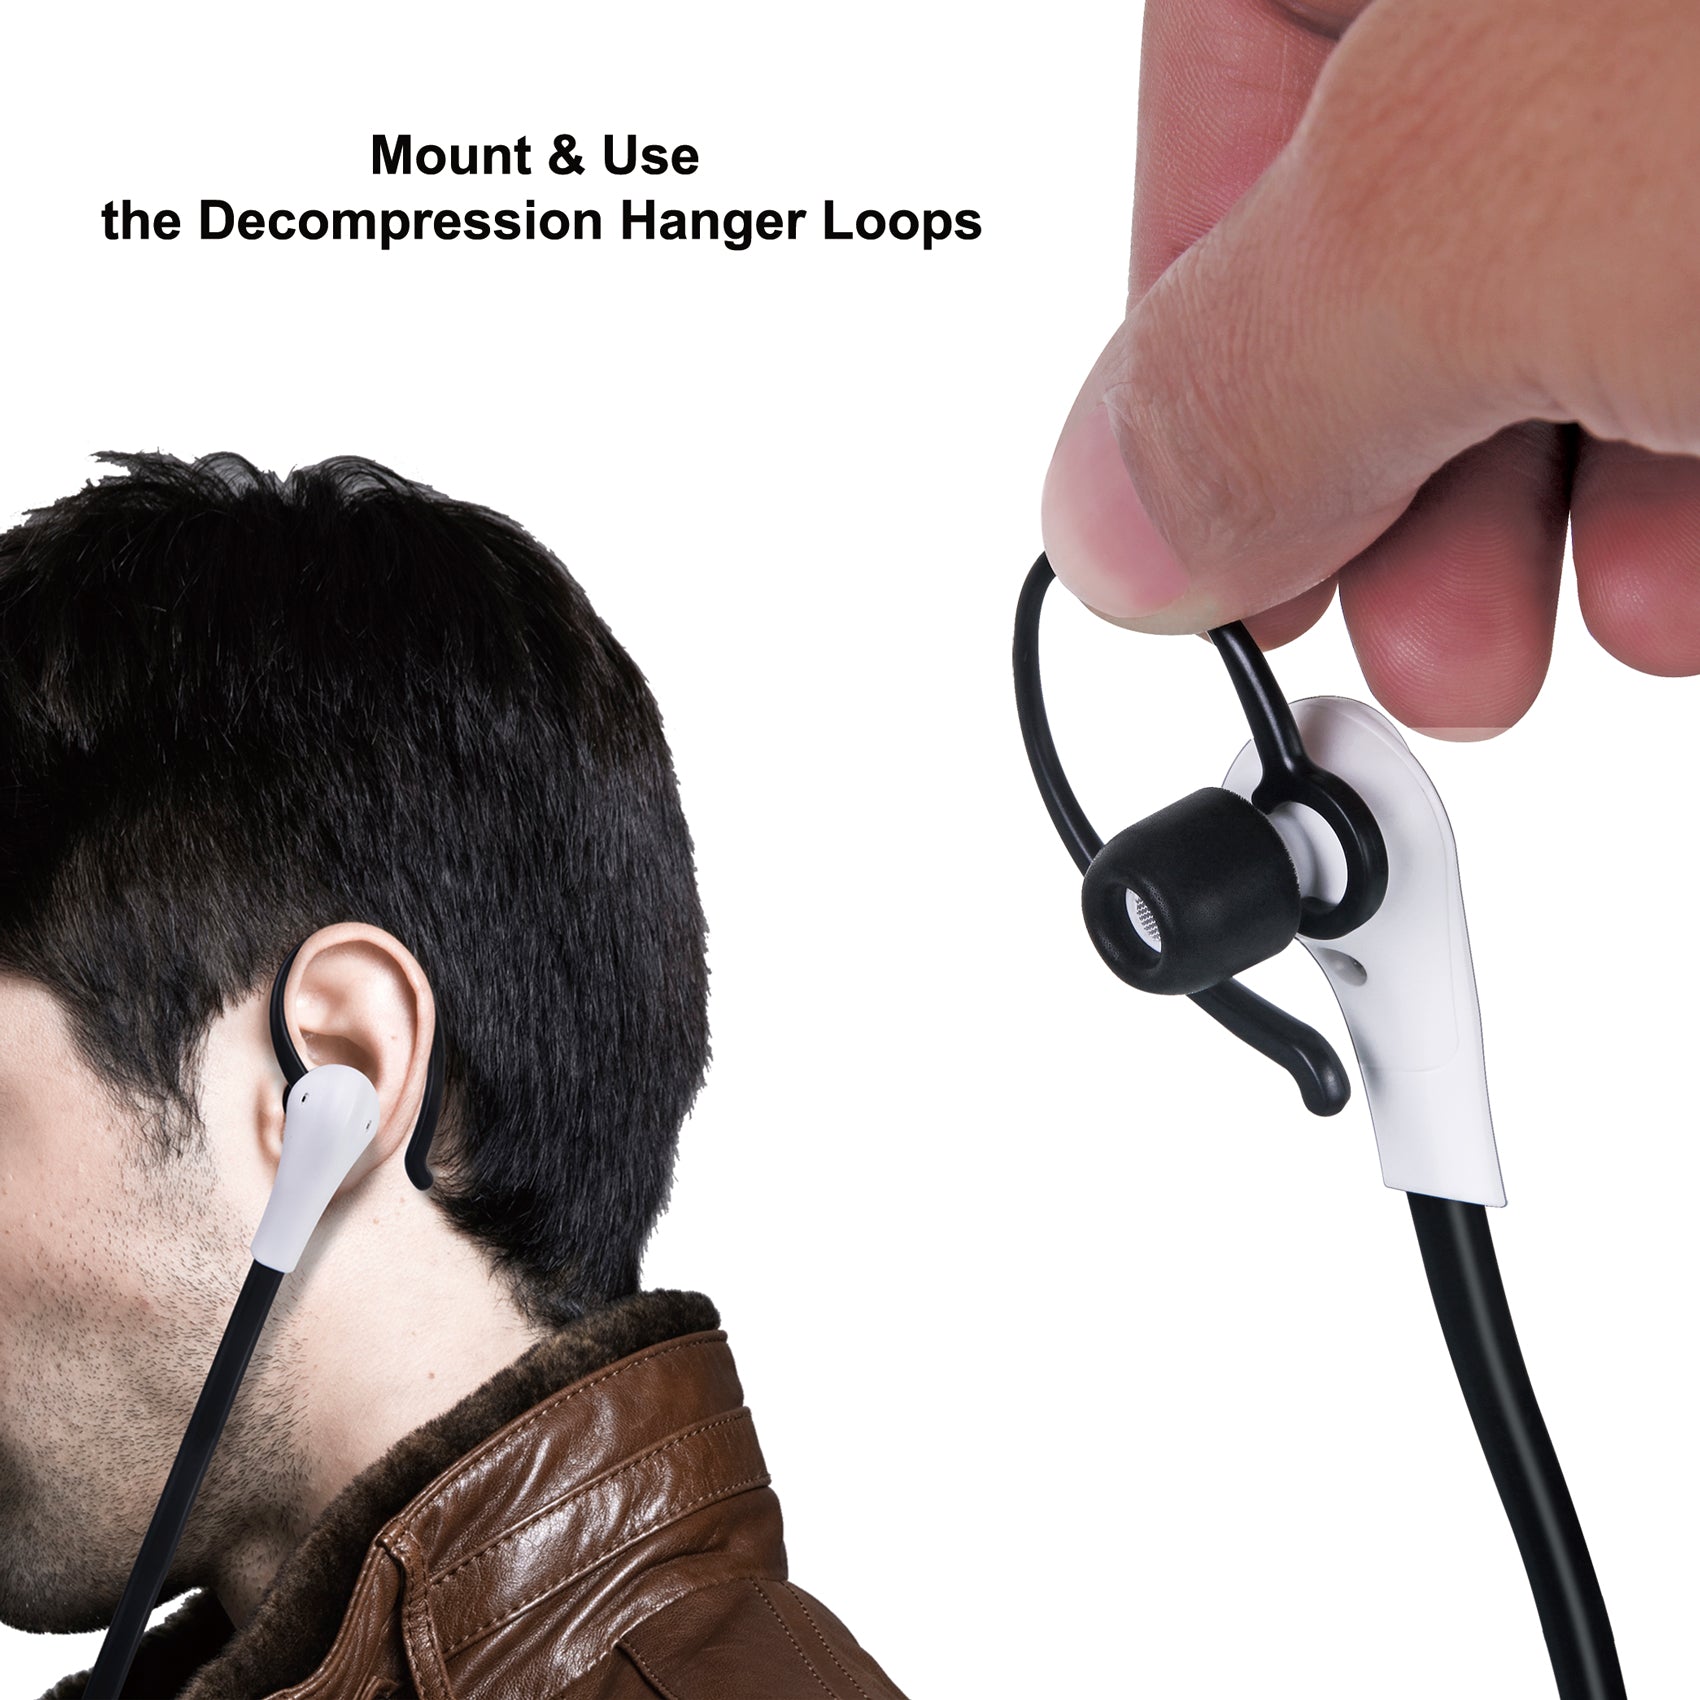 SIMOLIO hanger loops for wireless in ear tv headphones mount use